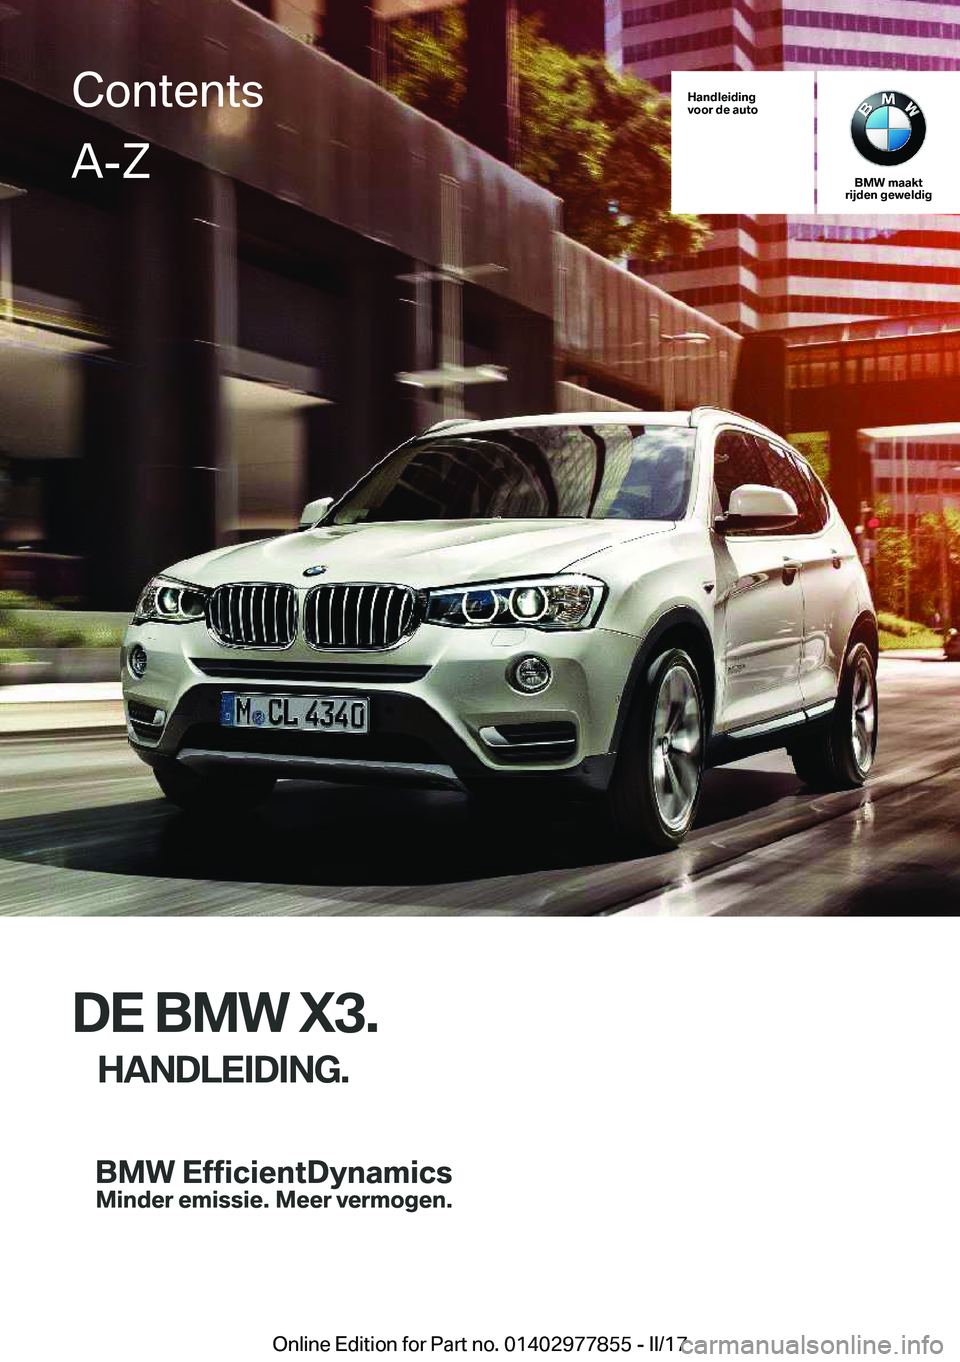 BMW X3 2017  Instructieboekjes (in Dutch) �H�a�n�d�l�e�i�d�i�n�g
�v�o�o�r��d�e��a�u�t�o
�B�M�W��m�a�a�k�t
�r�i�j�d�e�n��g�e�w�e�l�d�i�g
�D�E��B�M�W��X�3�.
�H�A�N�D�L�E�I�D�I�N�G�.
�C�o�n�t�e�n�t�s�A�-�Z
�O�n�l�i�n�e� �E�d�i�t�i�o�n� �f�